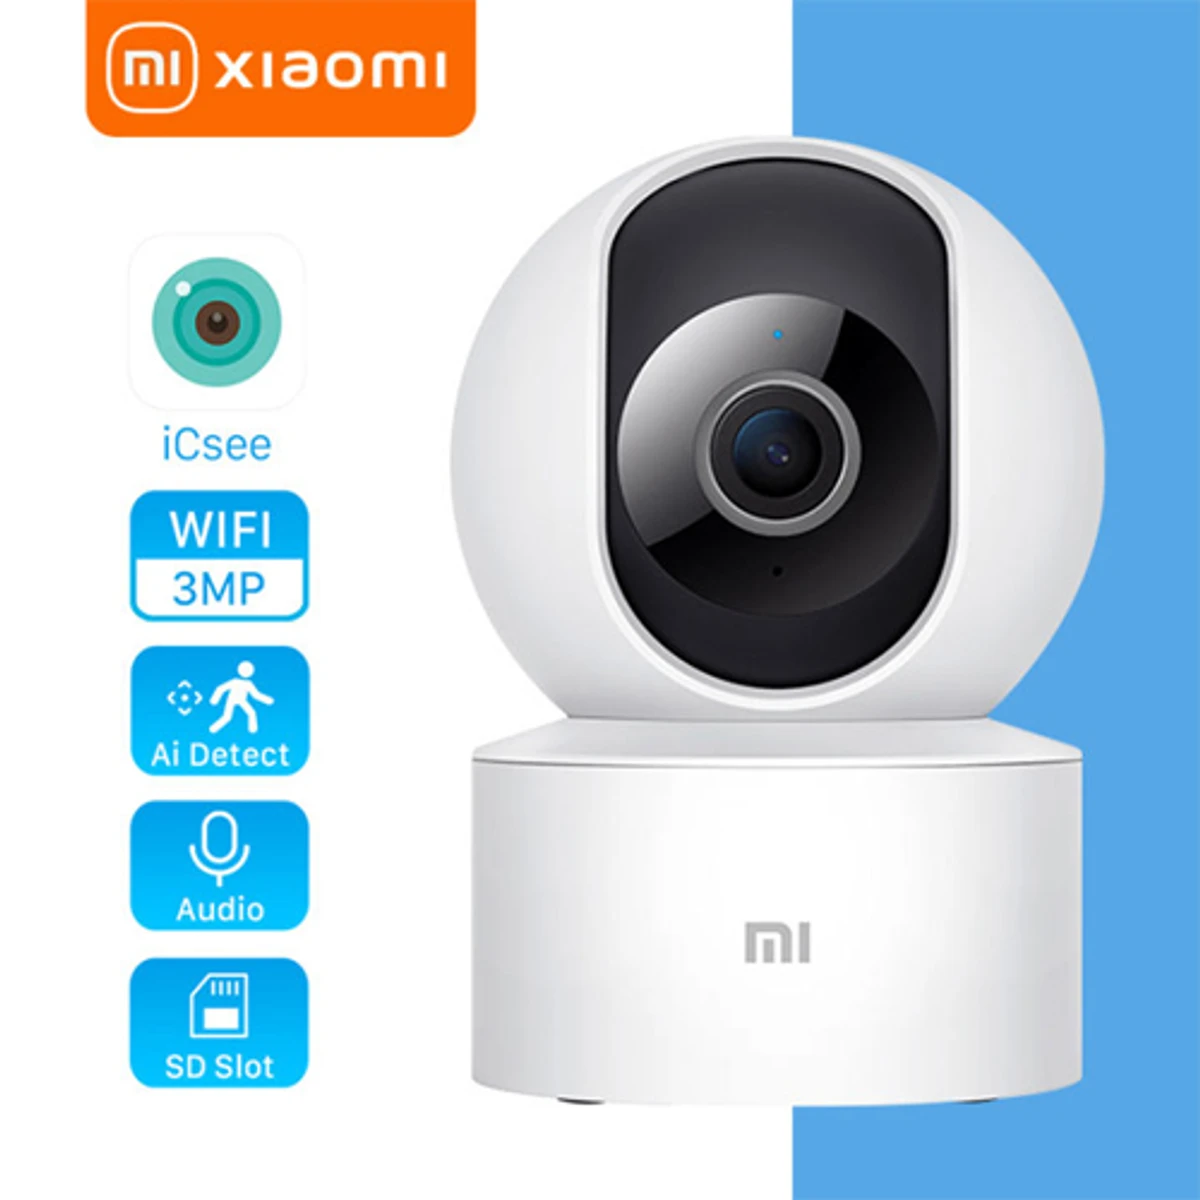 Mi 360° Home Security Camera (Night Vision Wireless Webcam)